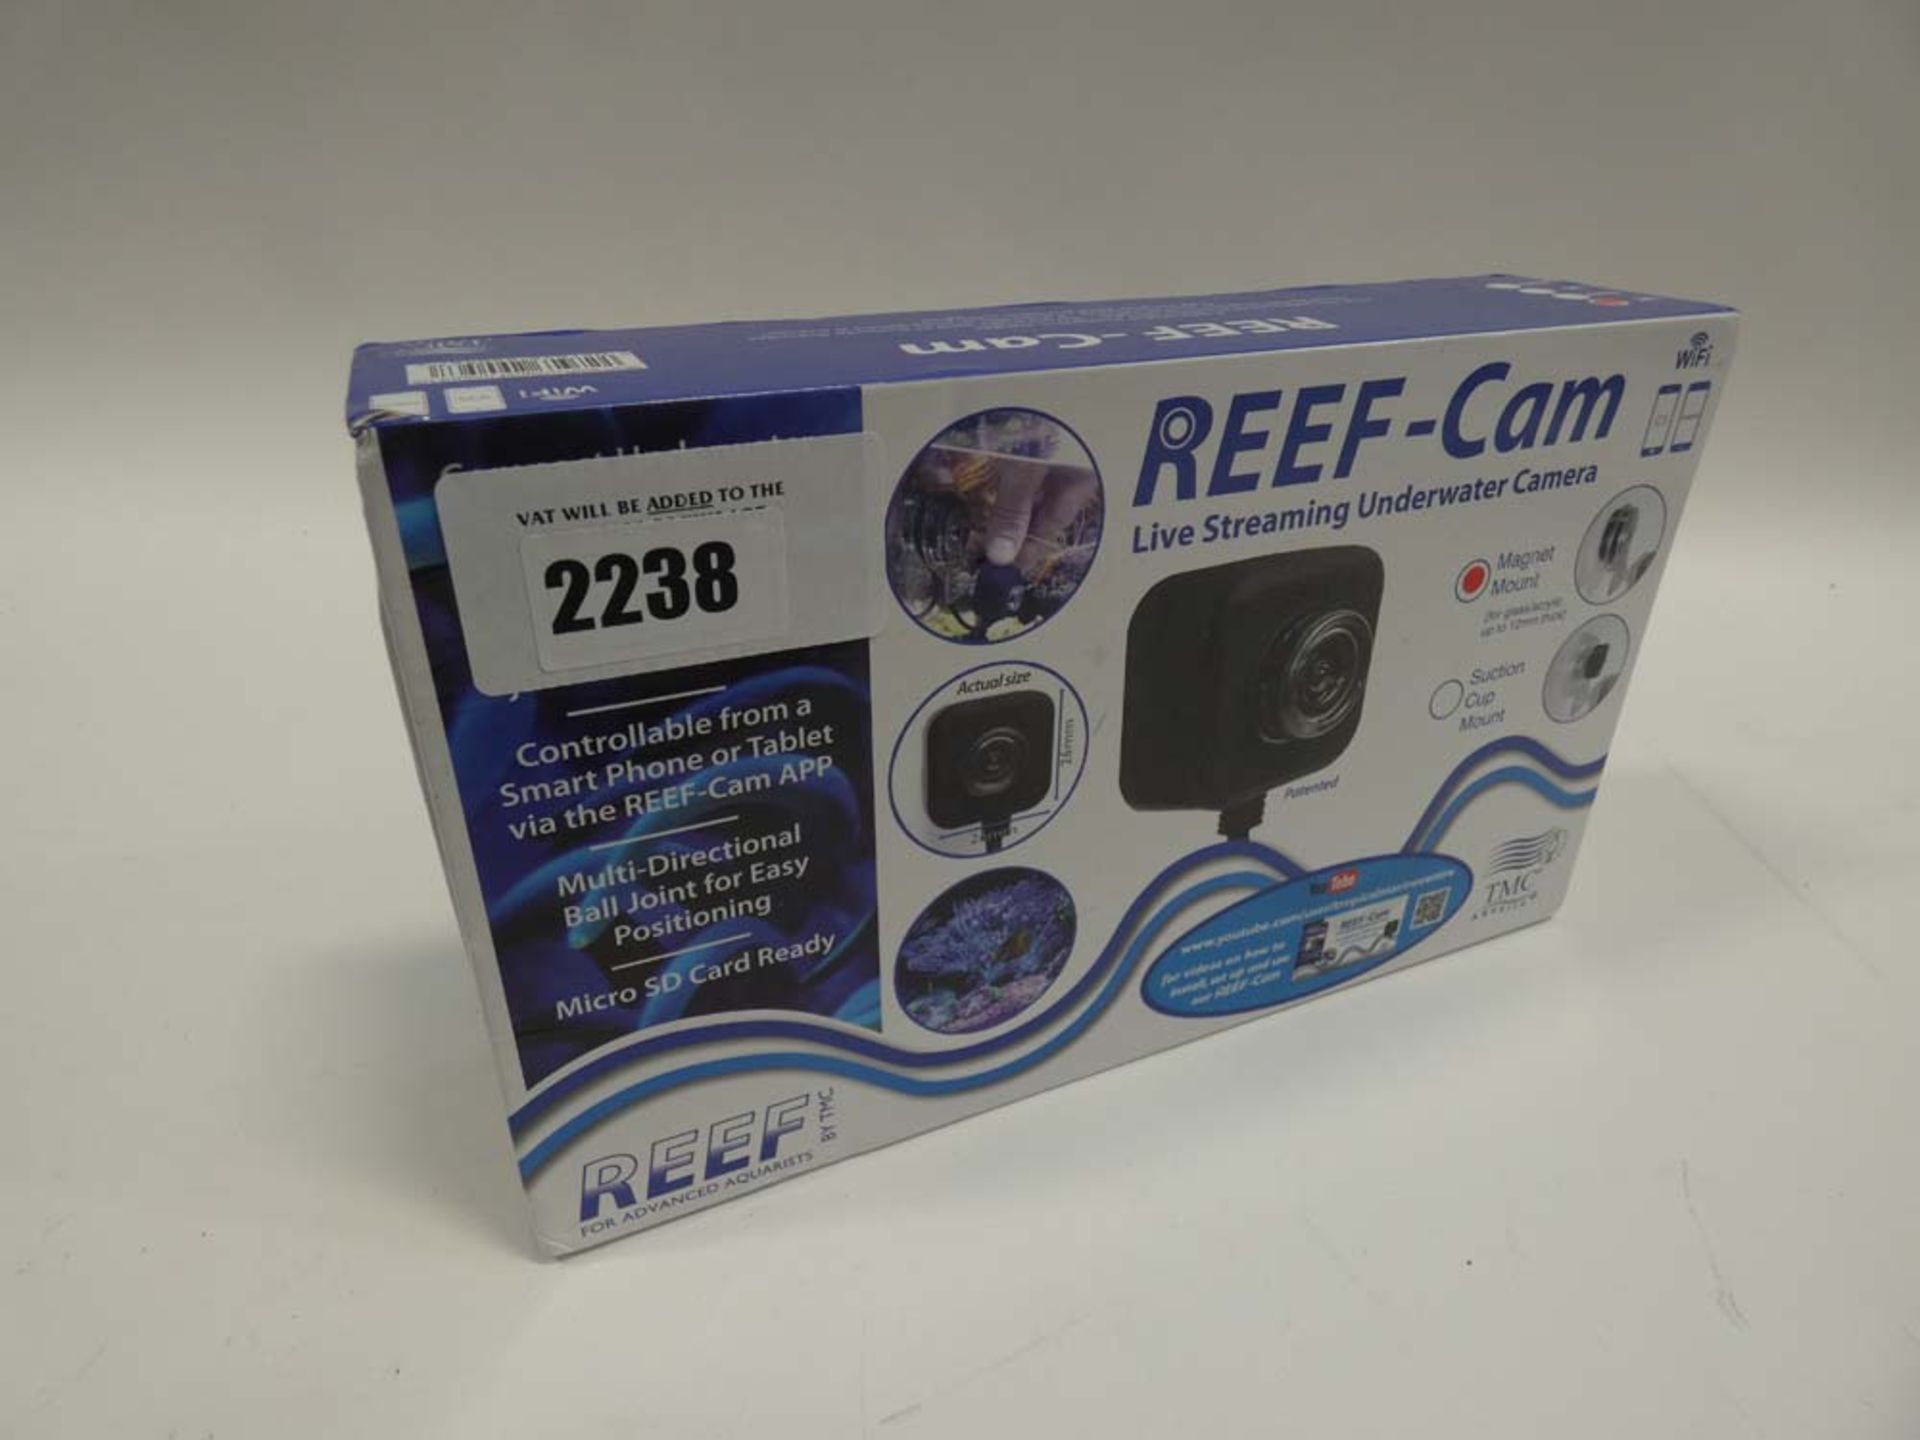 REEF-Cam live streaming underwater camera